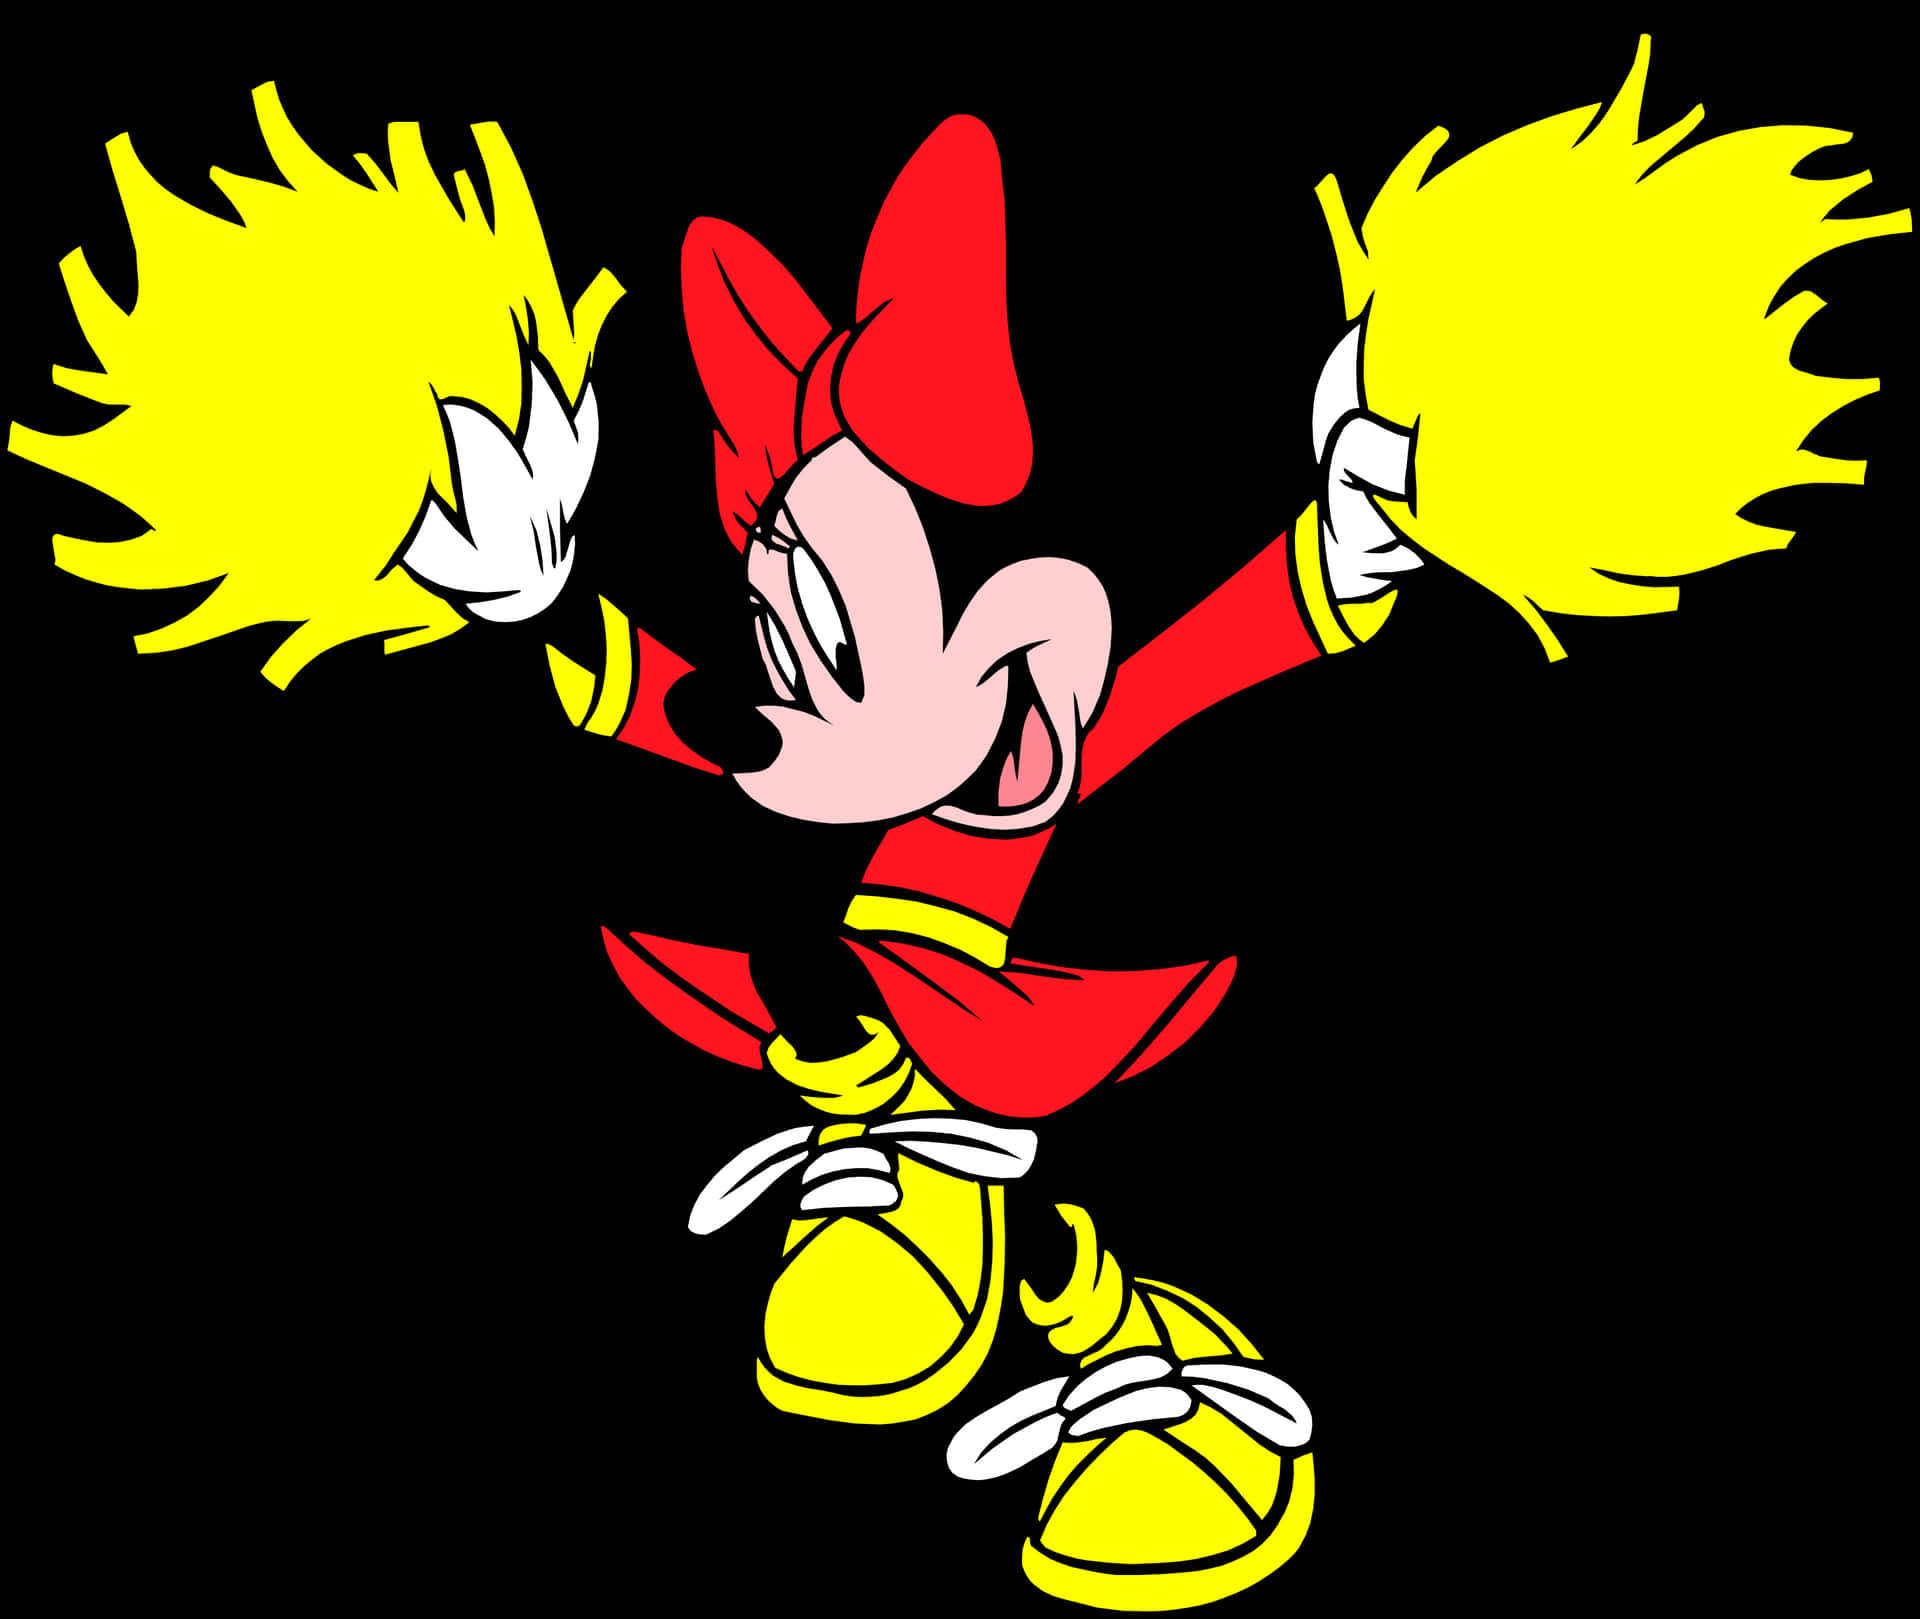 Cheerleader Minnie Mouse Cartoon PNG image